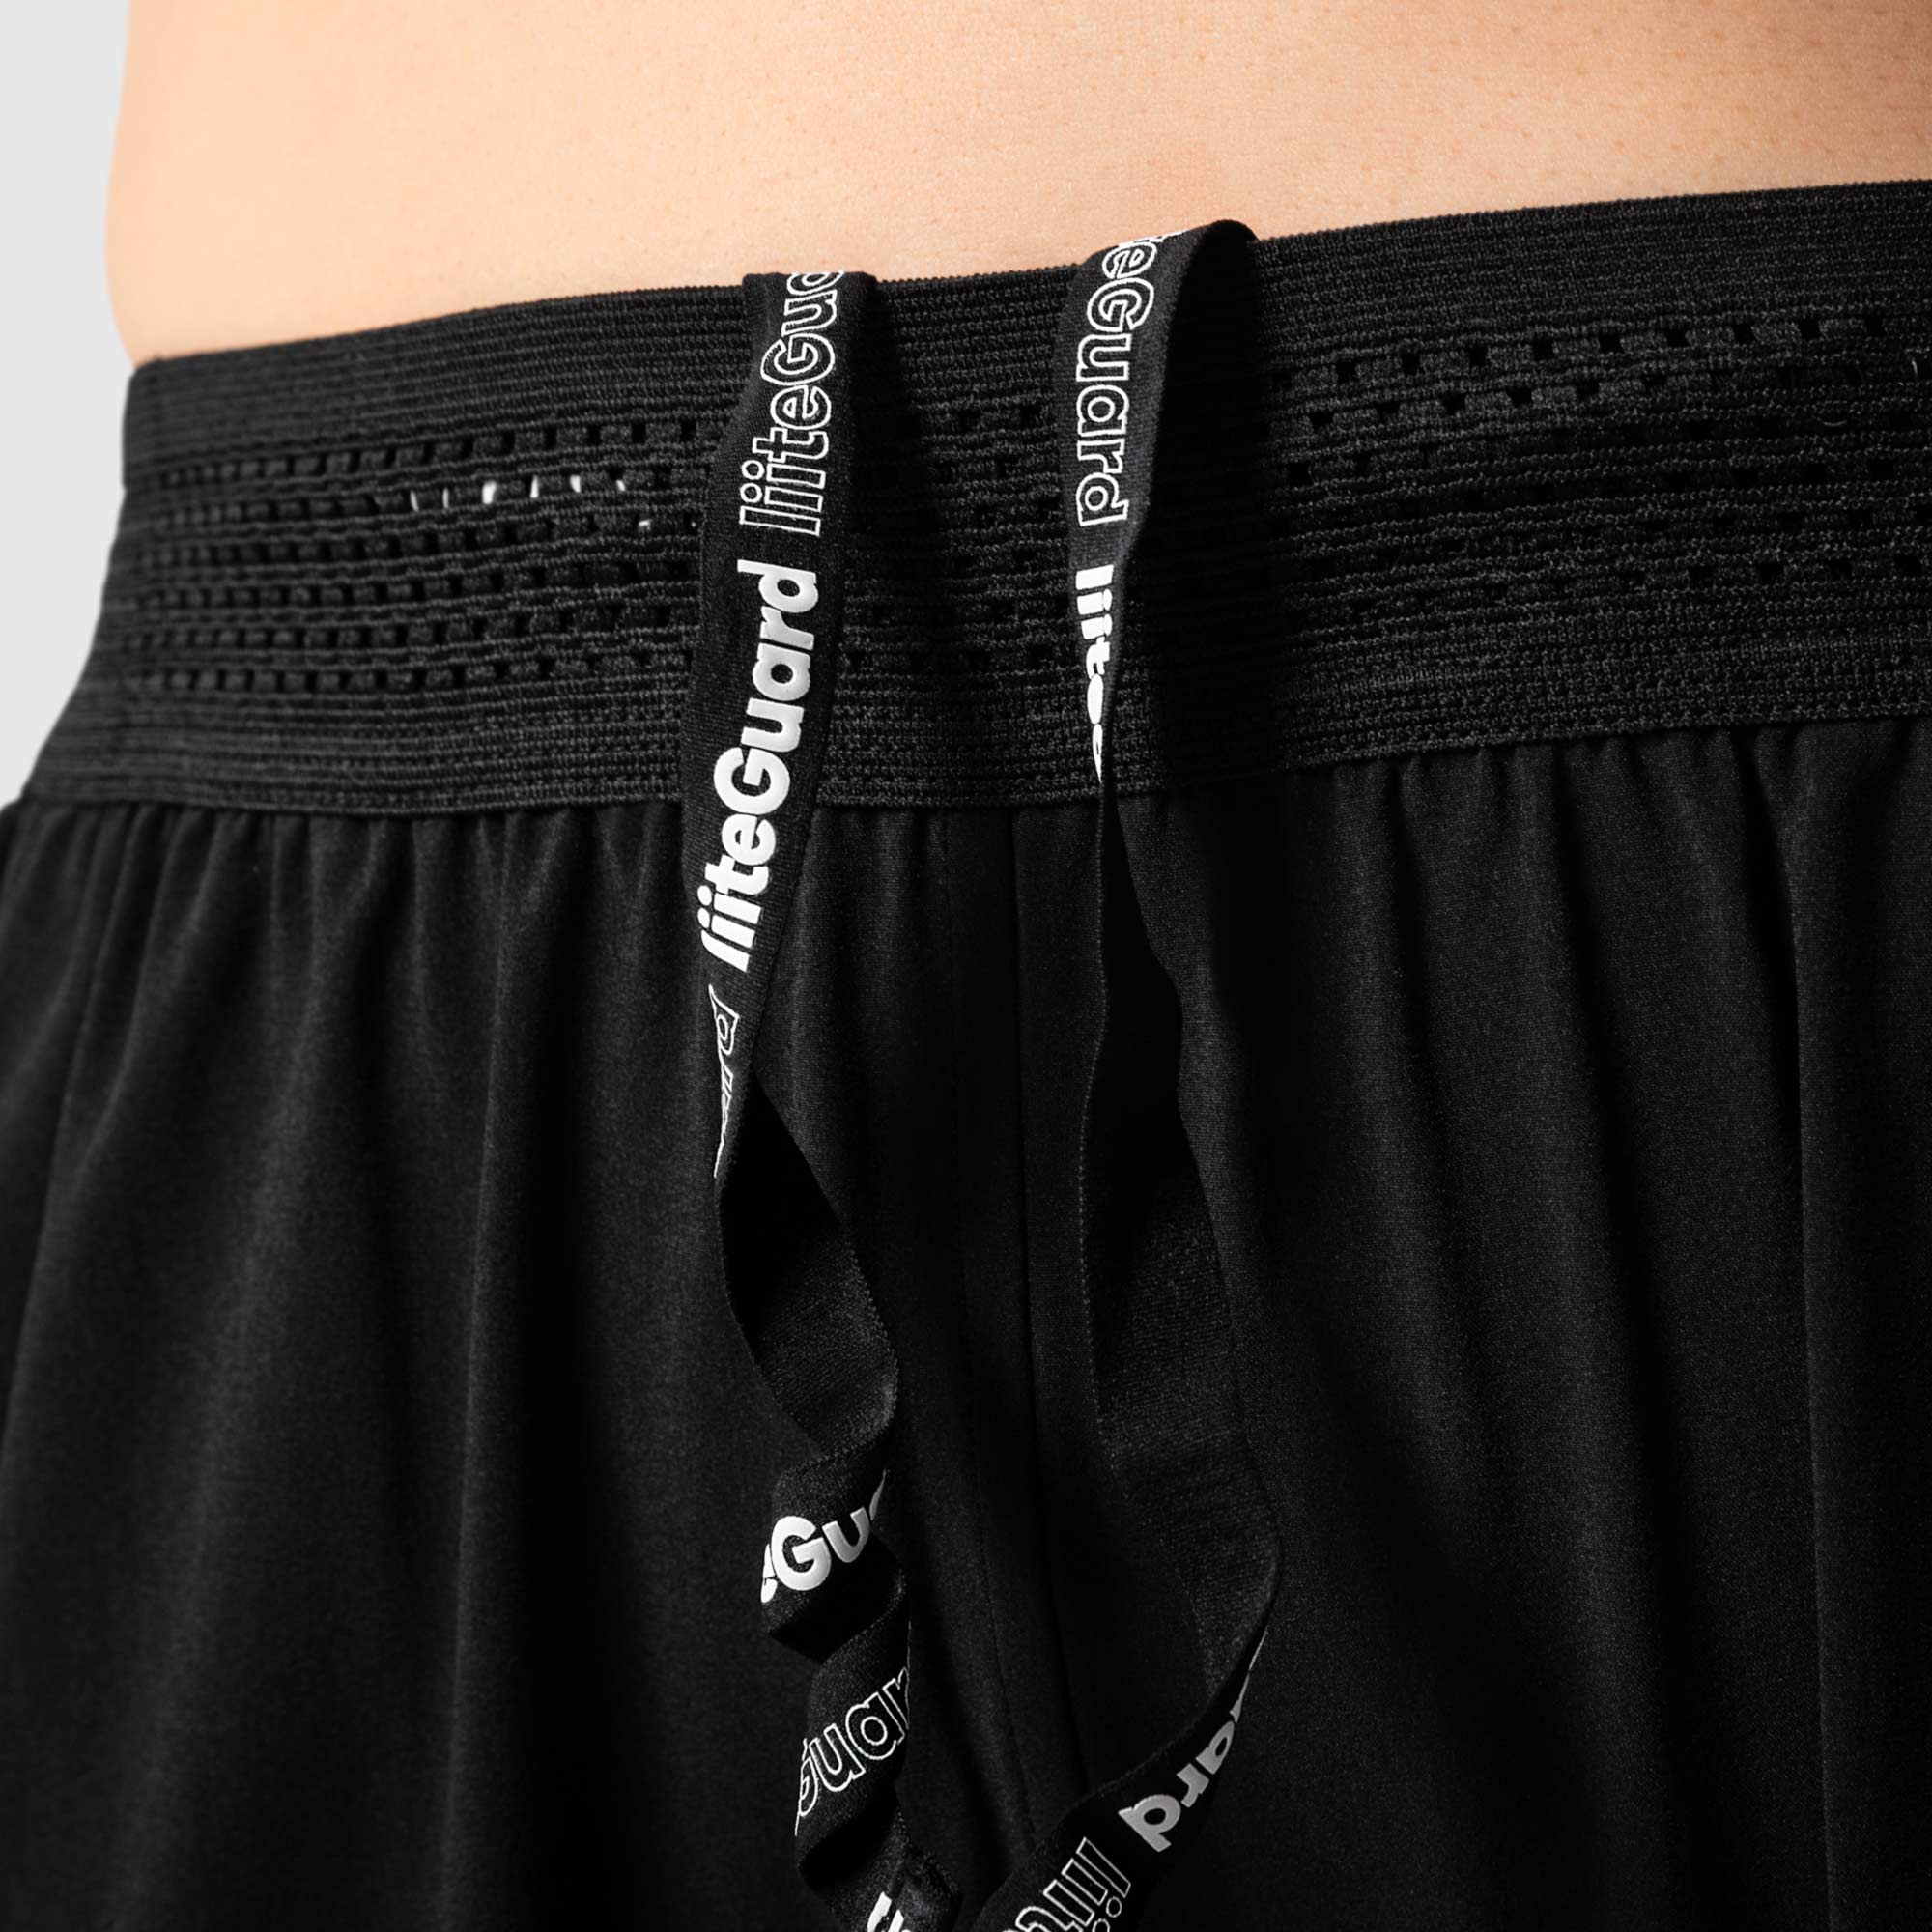 Liiteguard RE-LIITE LONG PANTS (Dame) Trousers SORT